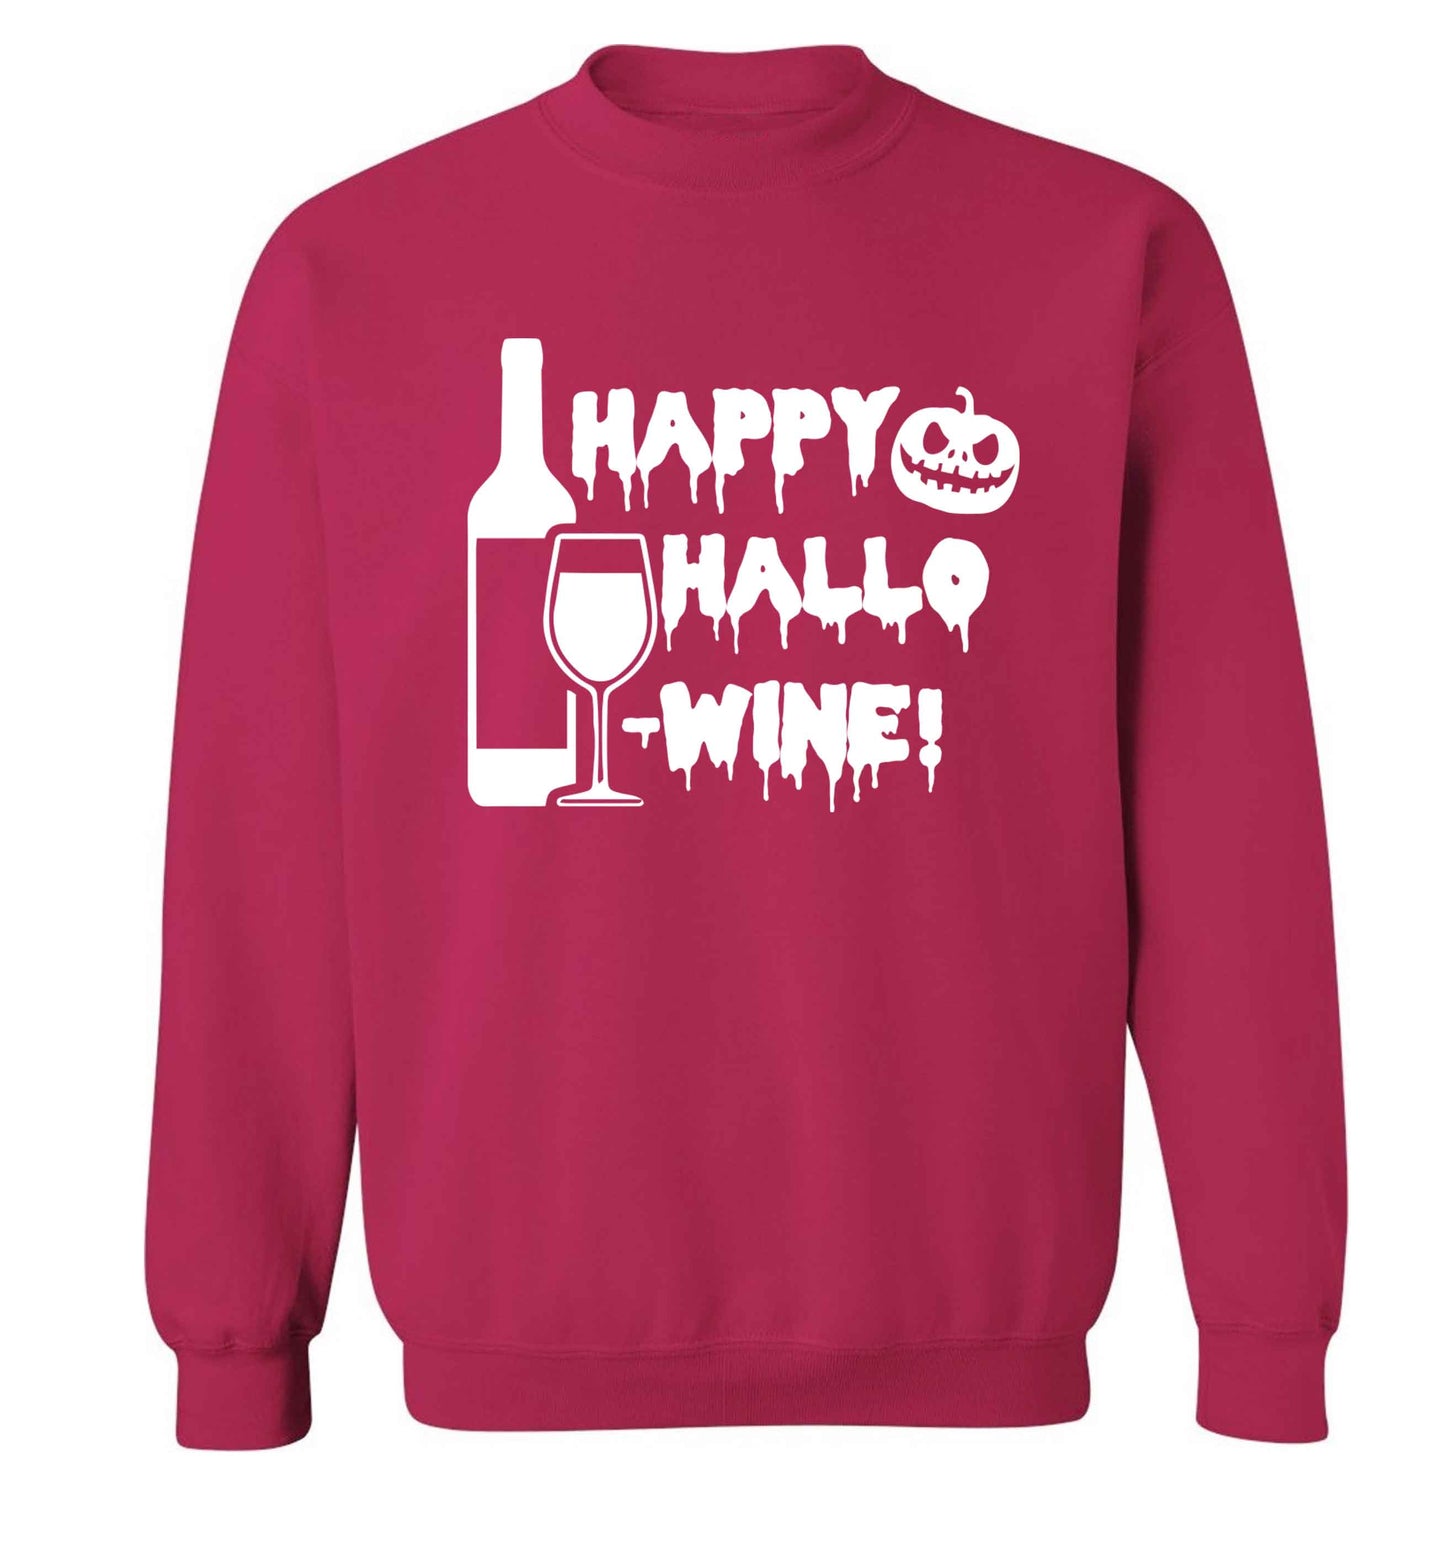 Happy hallow-wine Adult's unisex pink Sweater 2XL